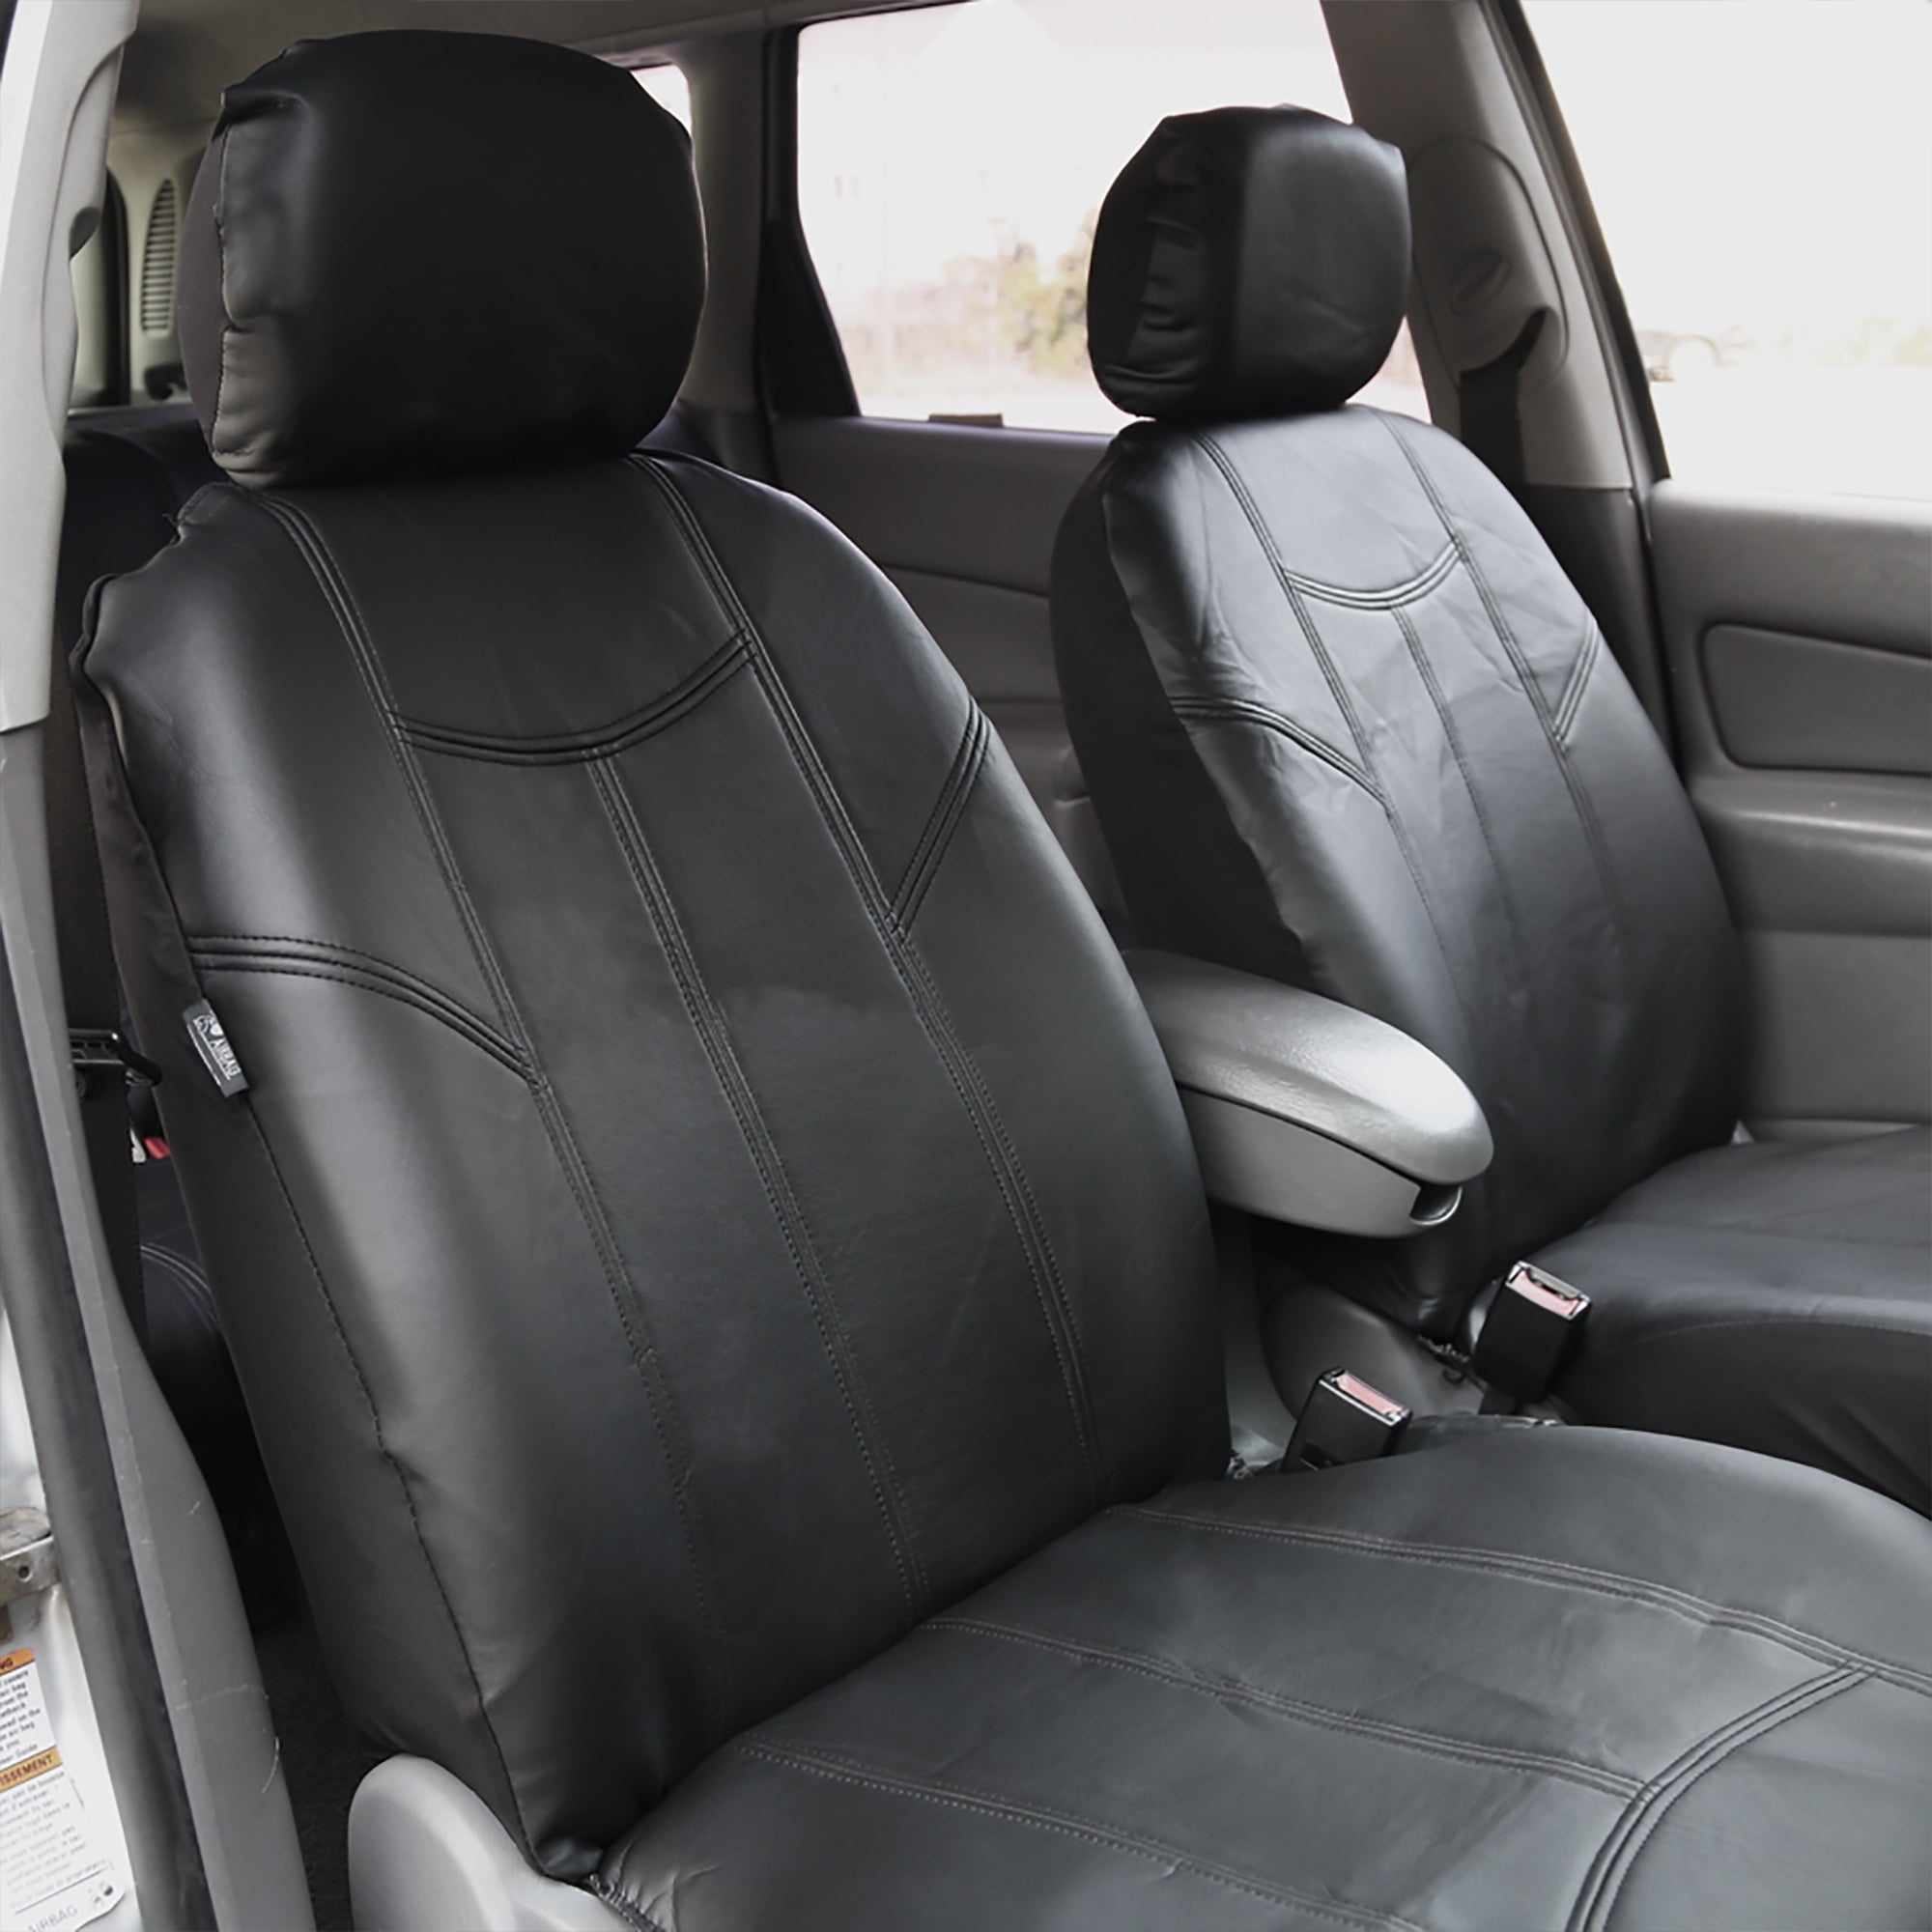 PU Leather Rome Seat Covers - Full Set Black